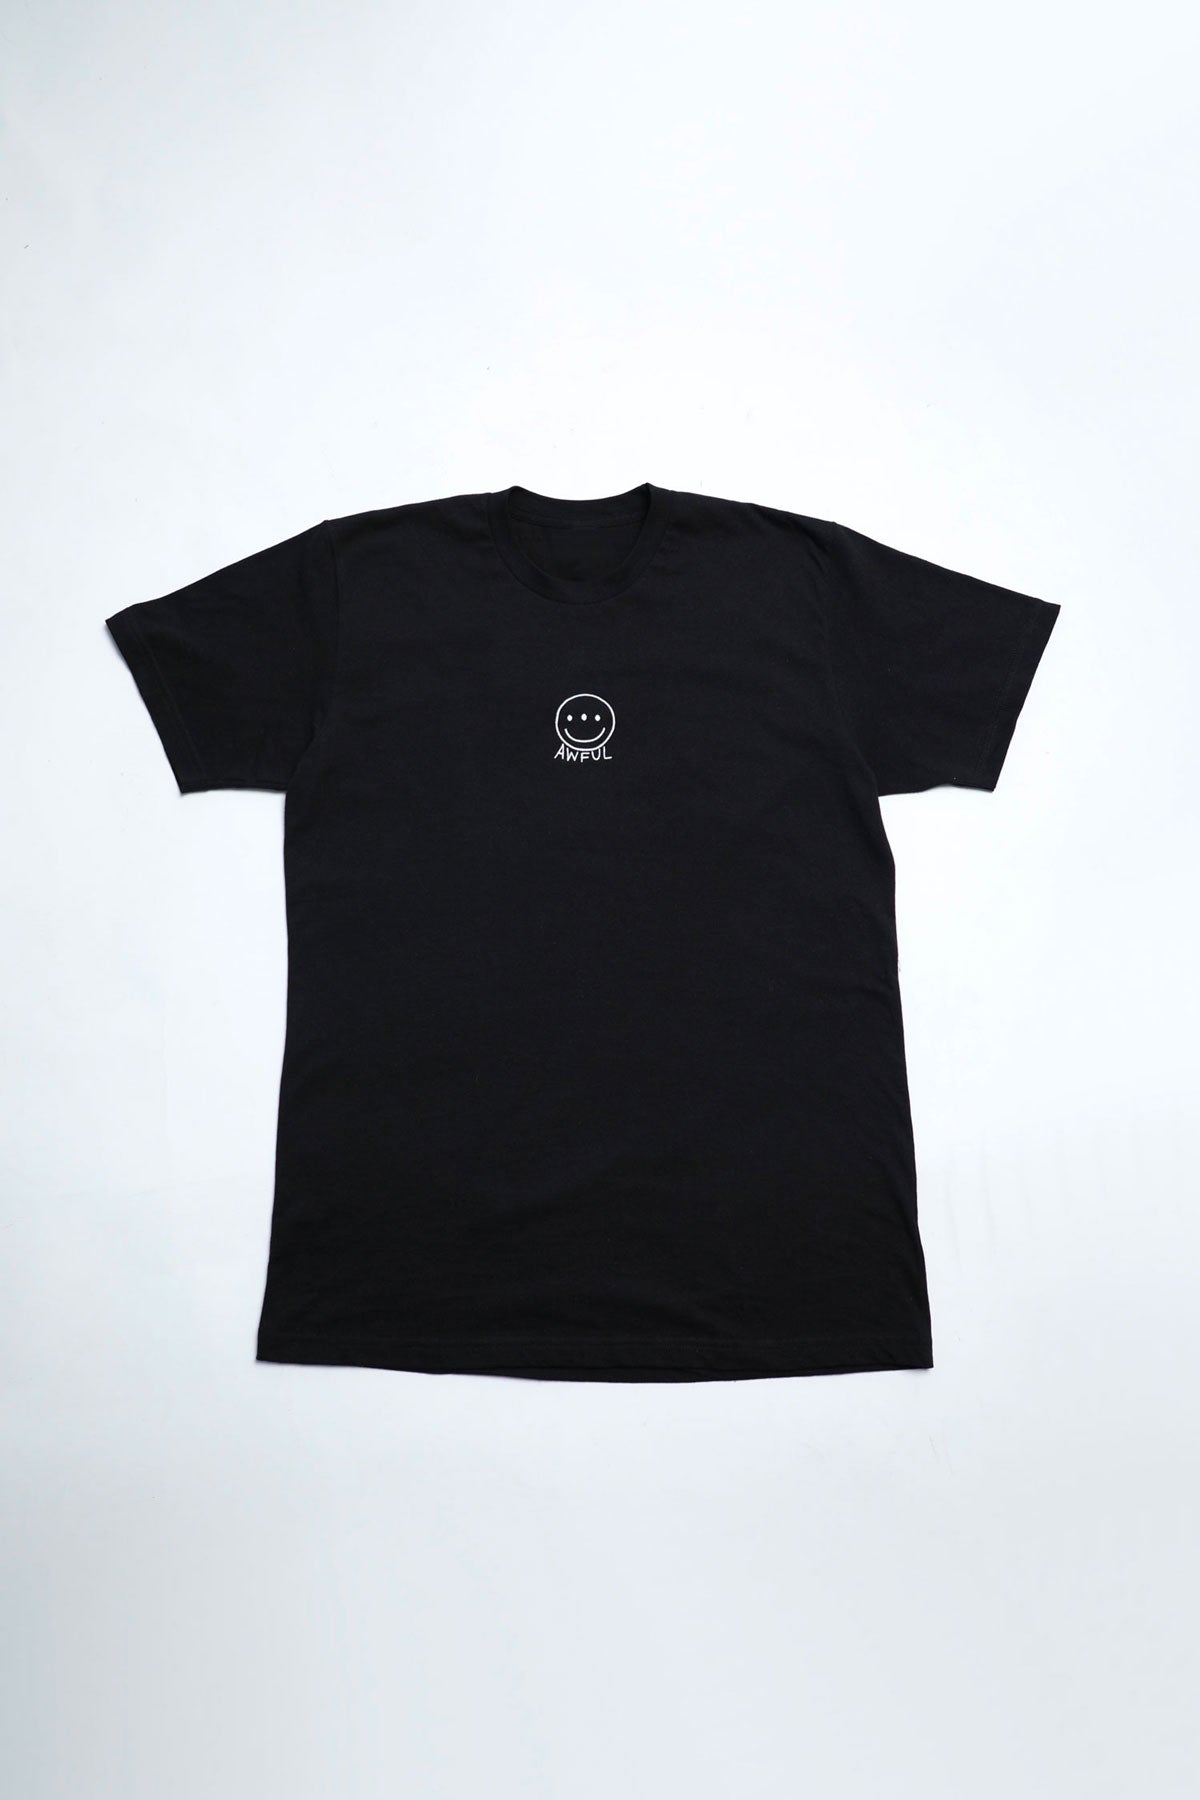 Awful3 Black T-Shirt Product Photo